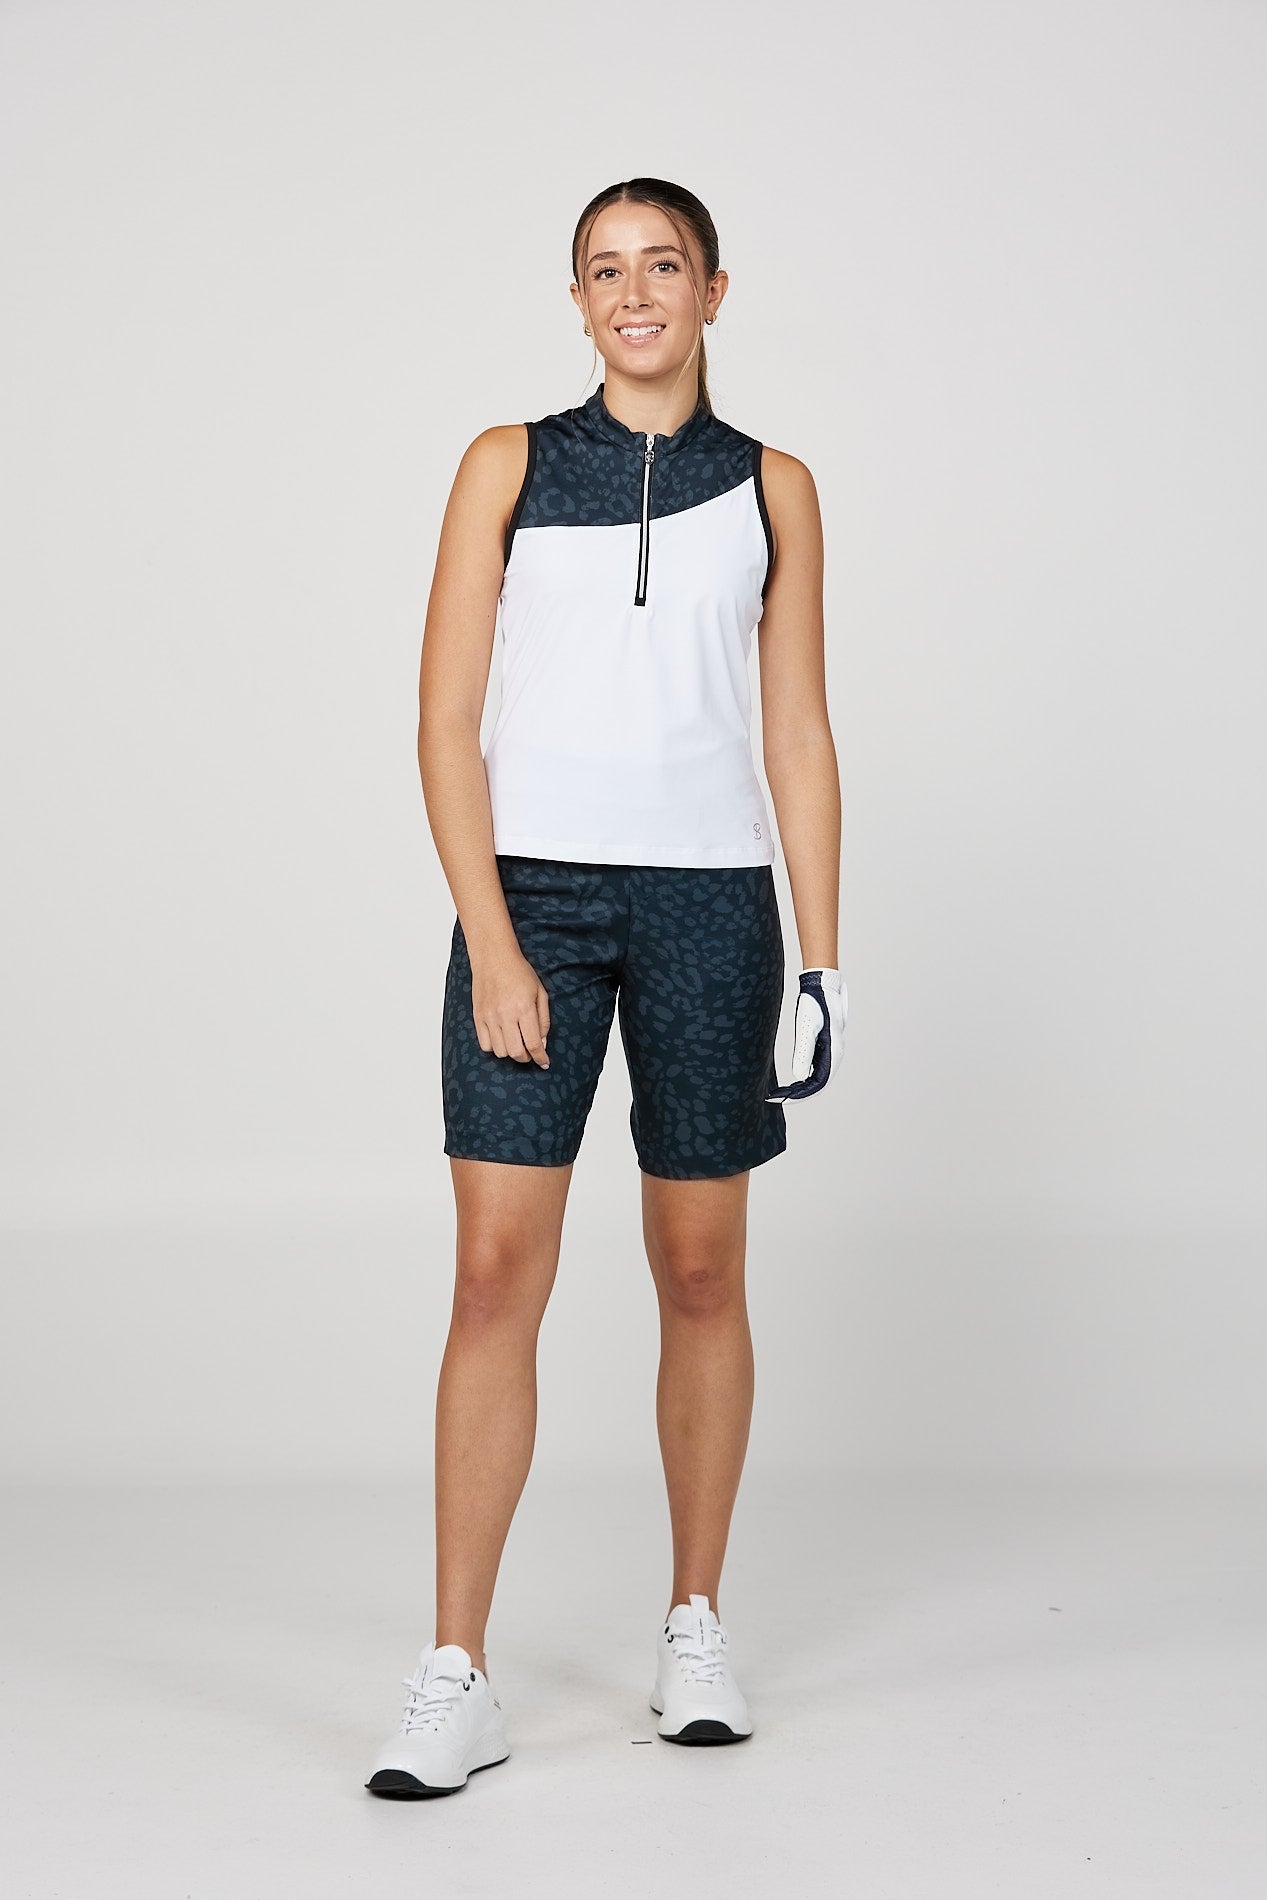 Isla Bonita Women's Golf Sleeveless Zipper Top by Sofibella, white and navy front view